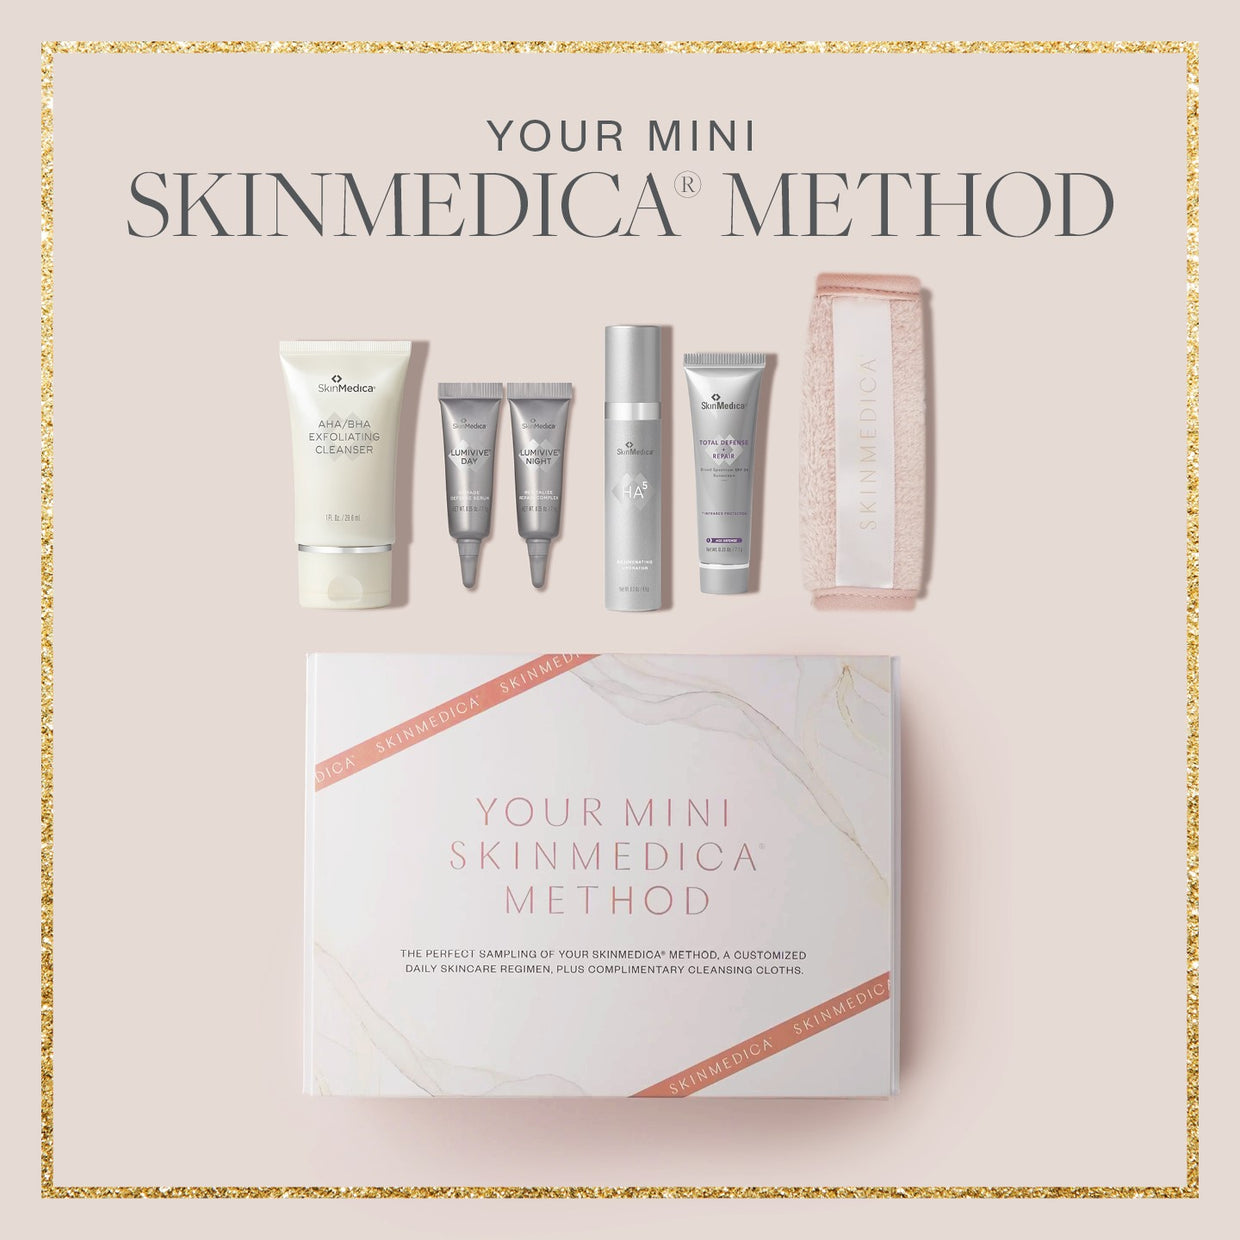 FREE GIFT - SkinMedica Mini Method Holiday Kit